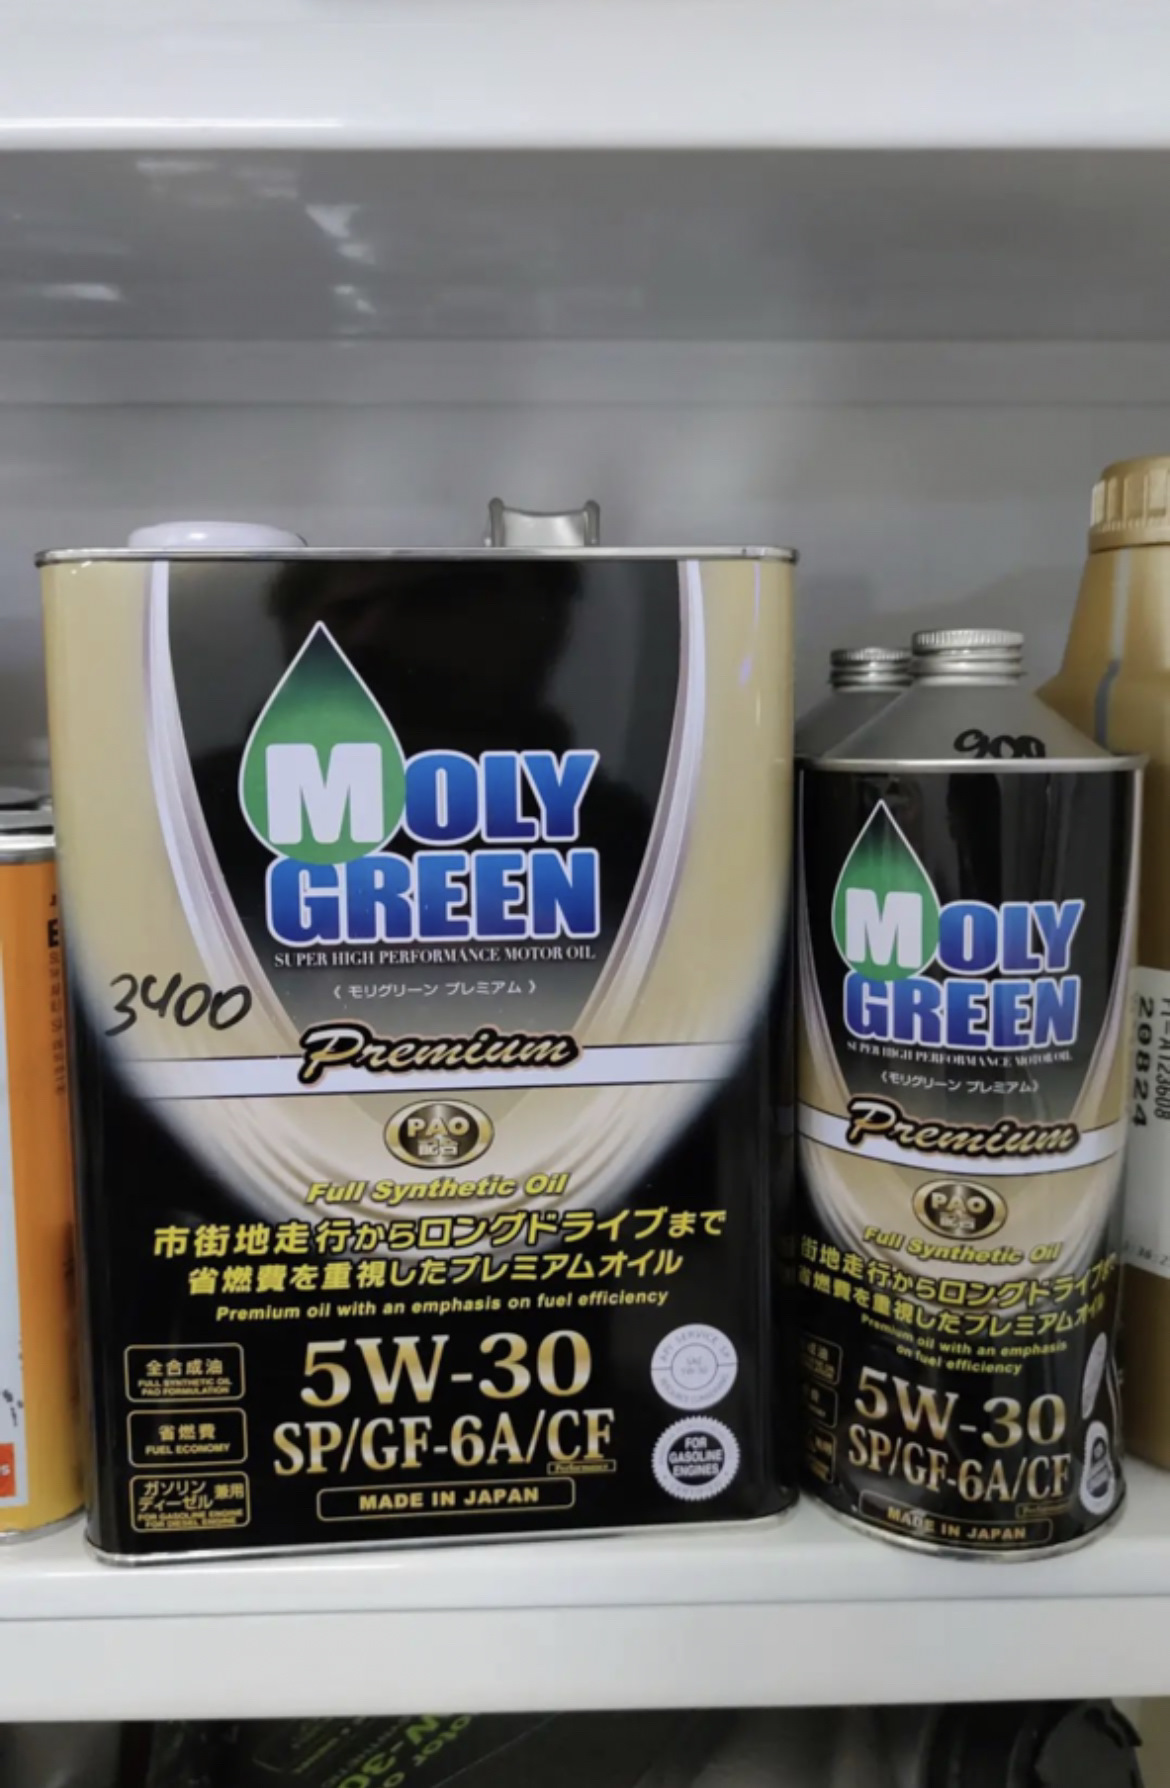 Отзыв масло moly green. Японское моторное масло Moly Green.